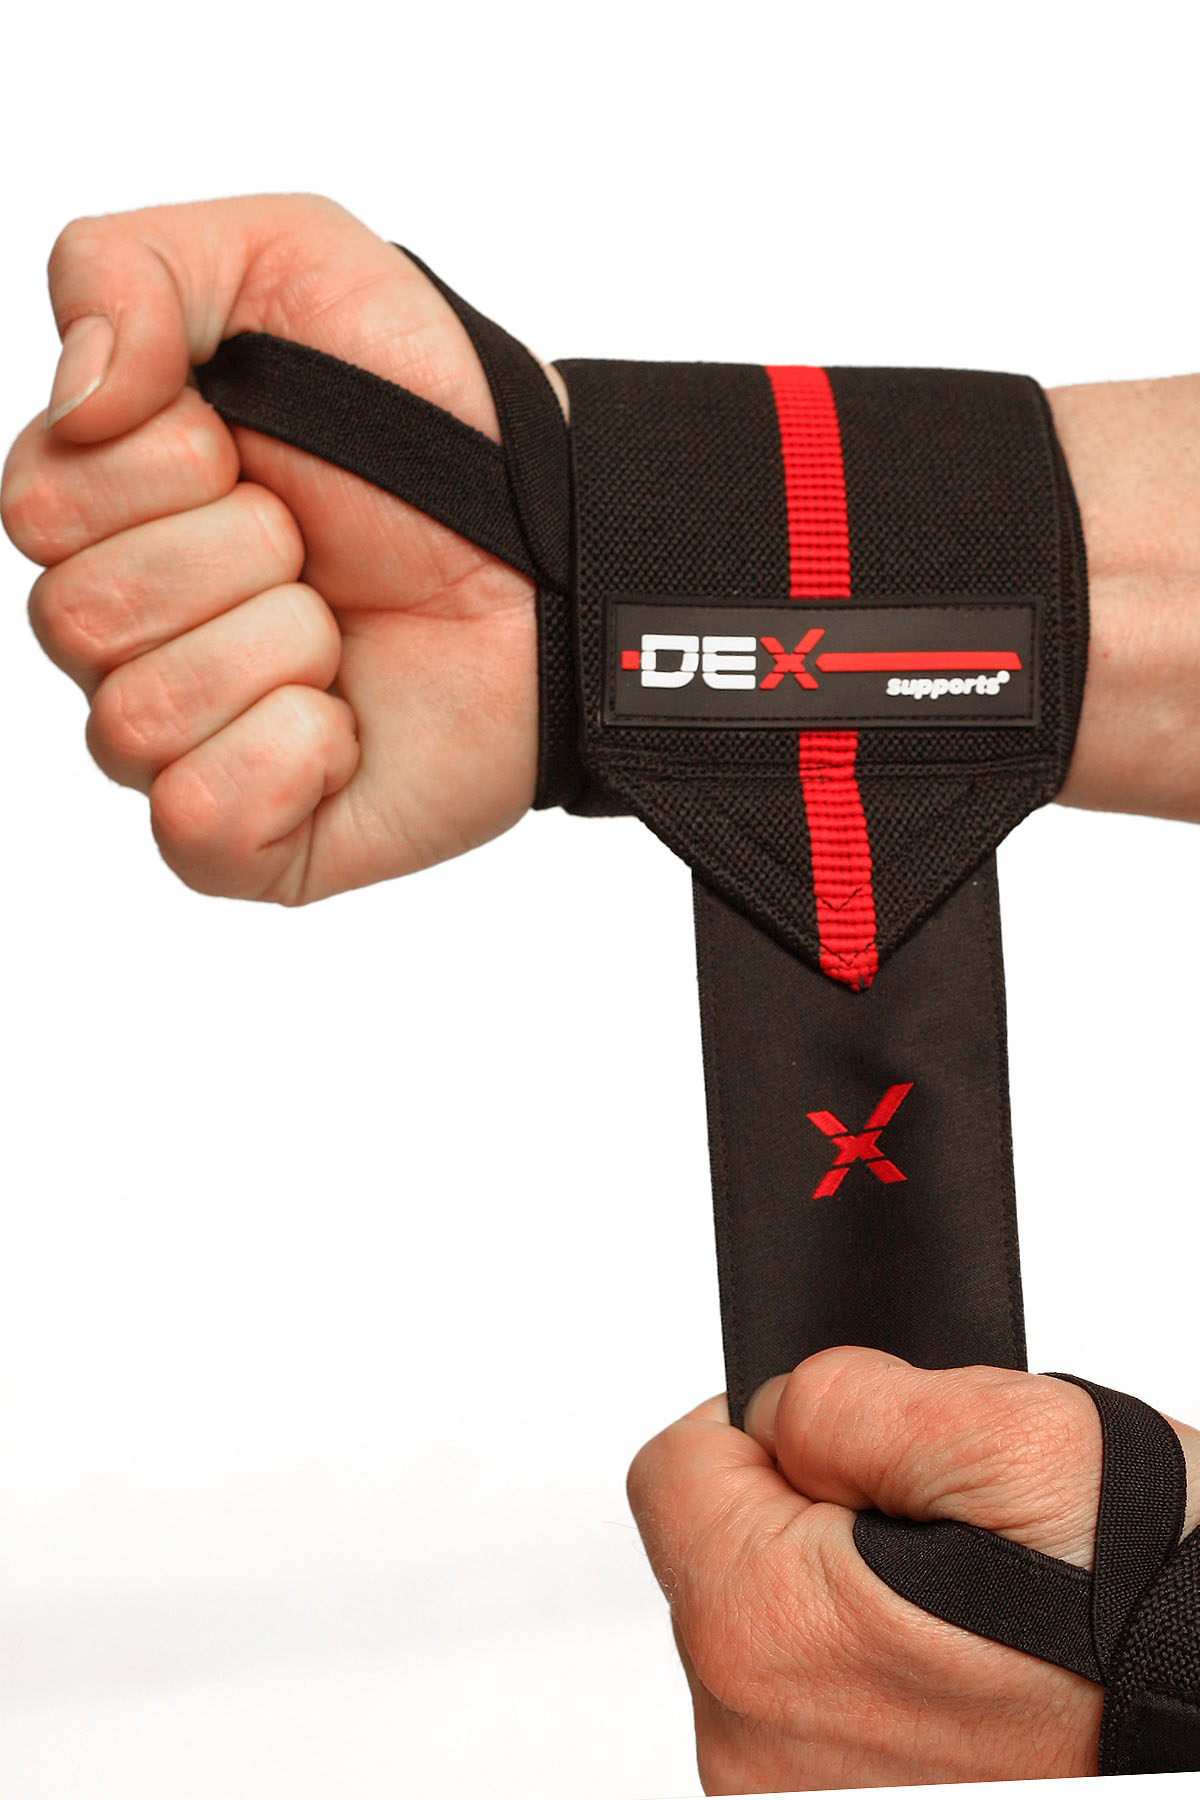 Dex Supports Bileklik Fitness Bilek Desteği , Wrist Wraps Elite Series